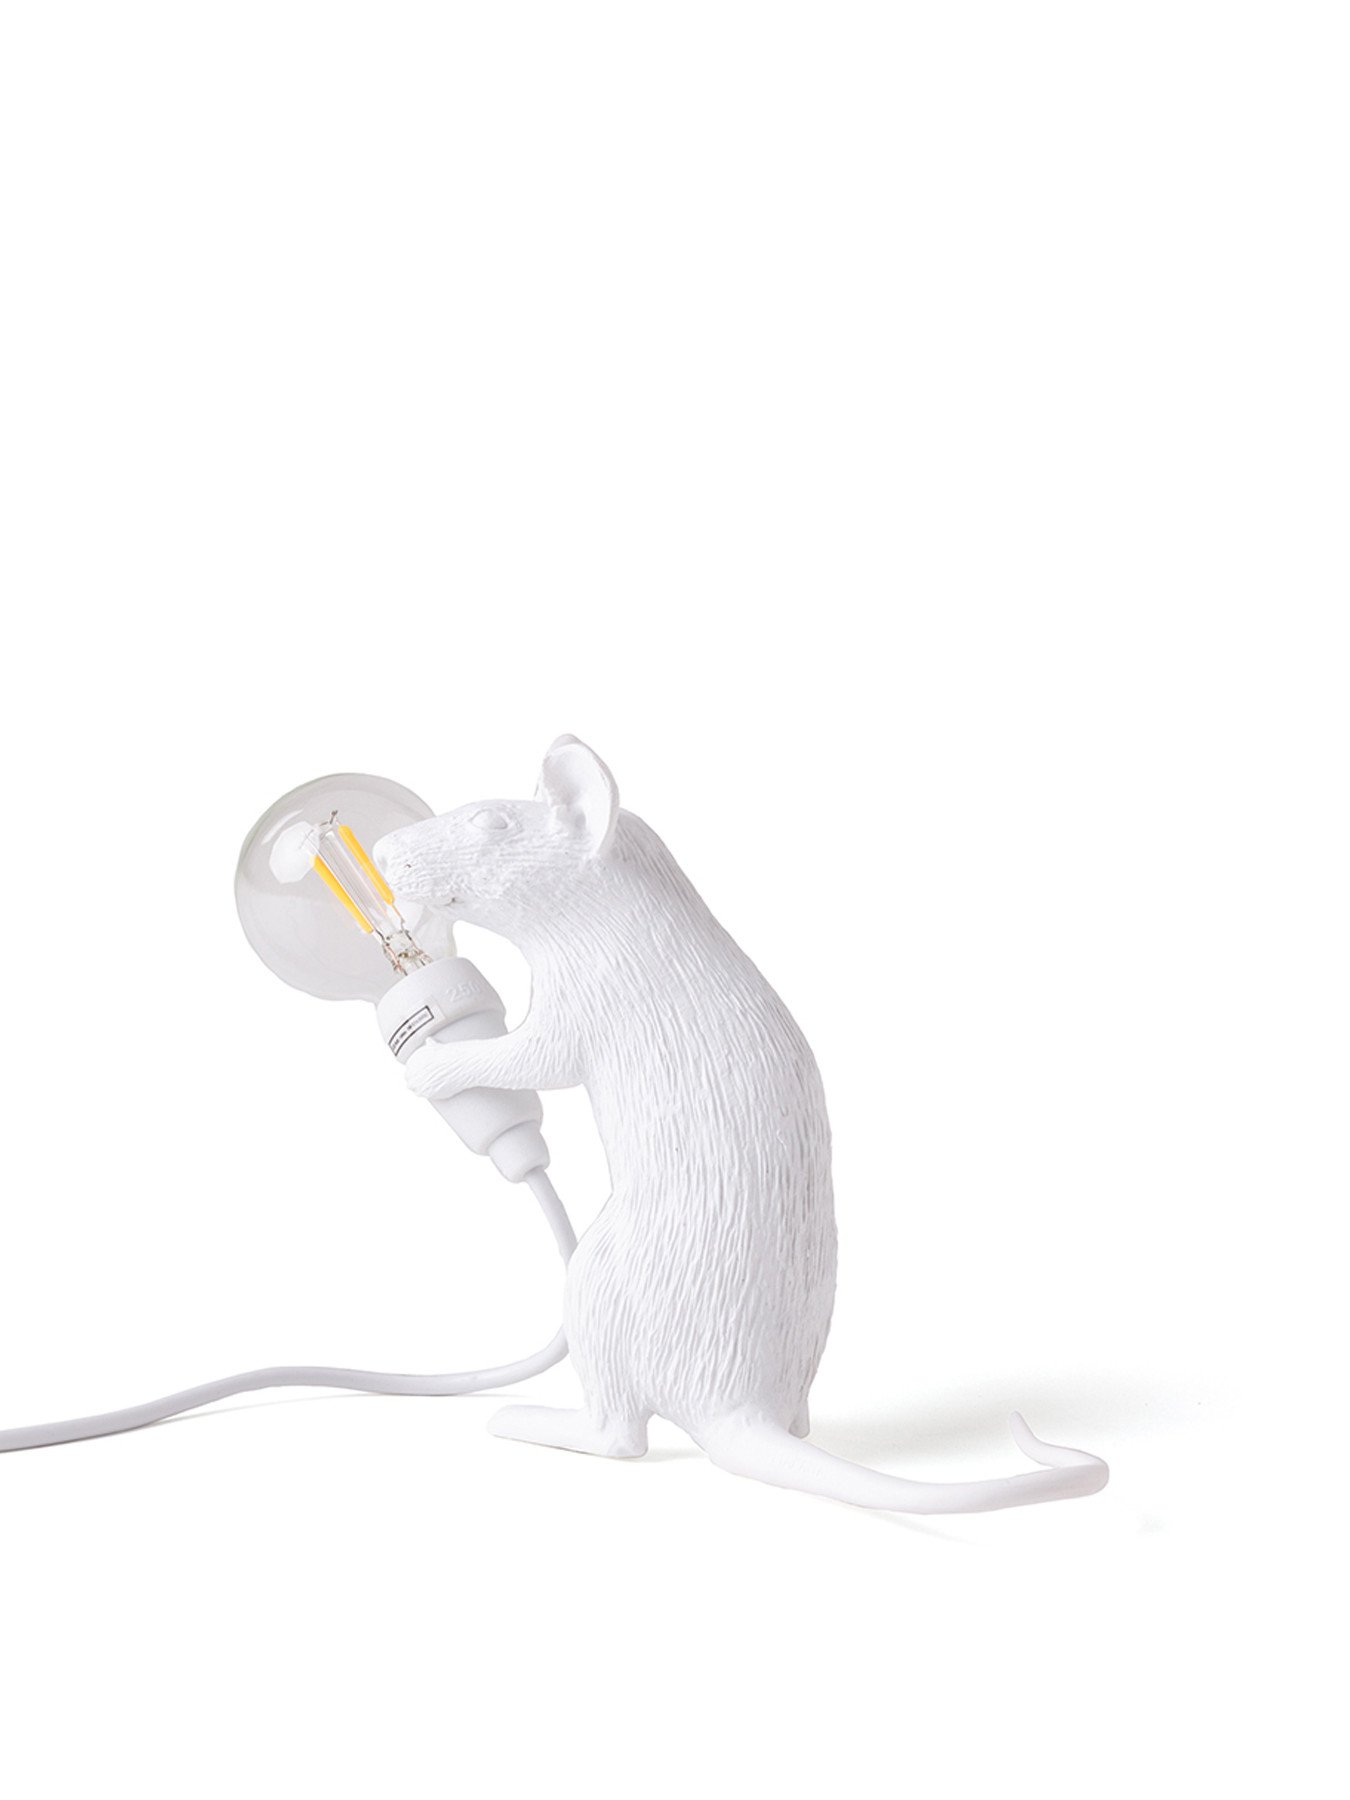 Seletti Mac Sitting Mouse Lamp | Fenwick